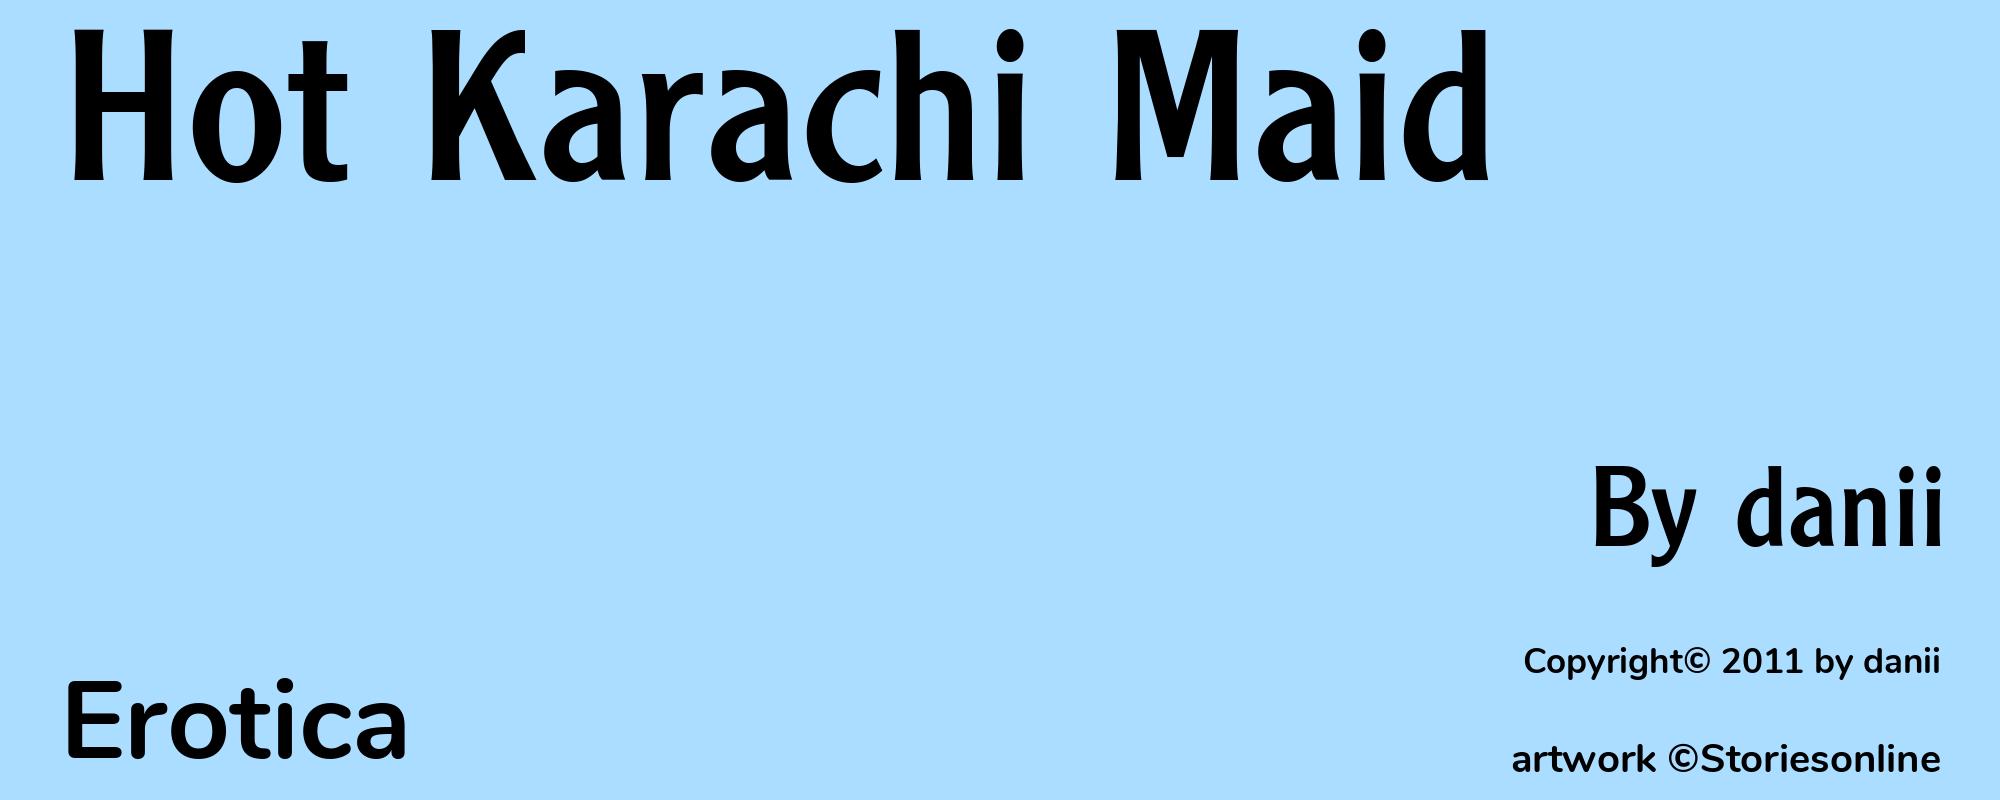 Hot Karachi Maid - Cover